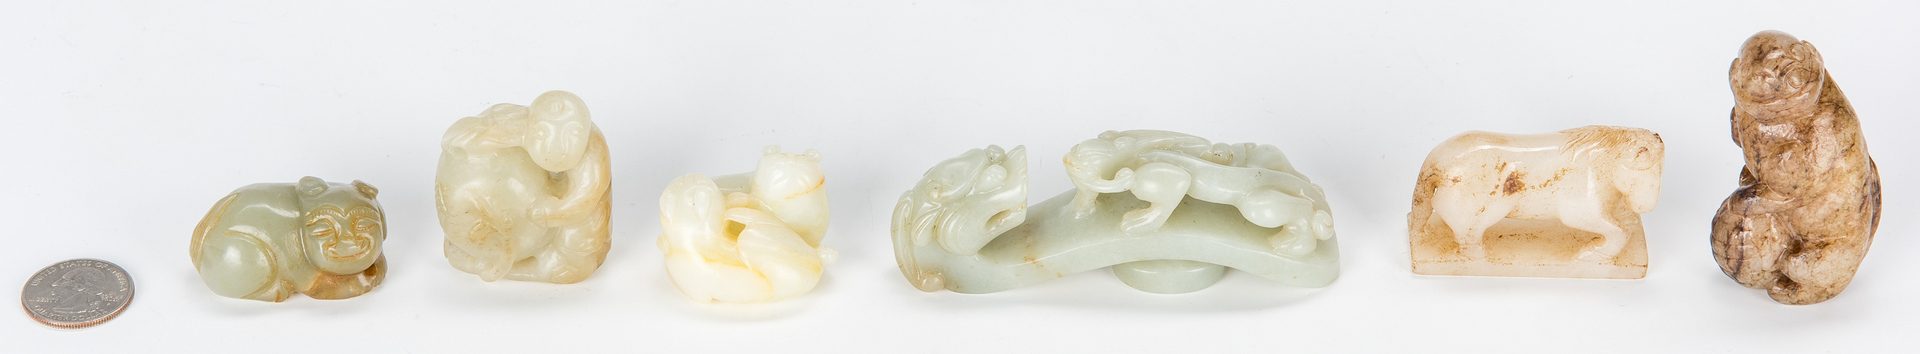 Lot 449: 5 Chinese Jade Figurals & 1 Jade Belt Hook